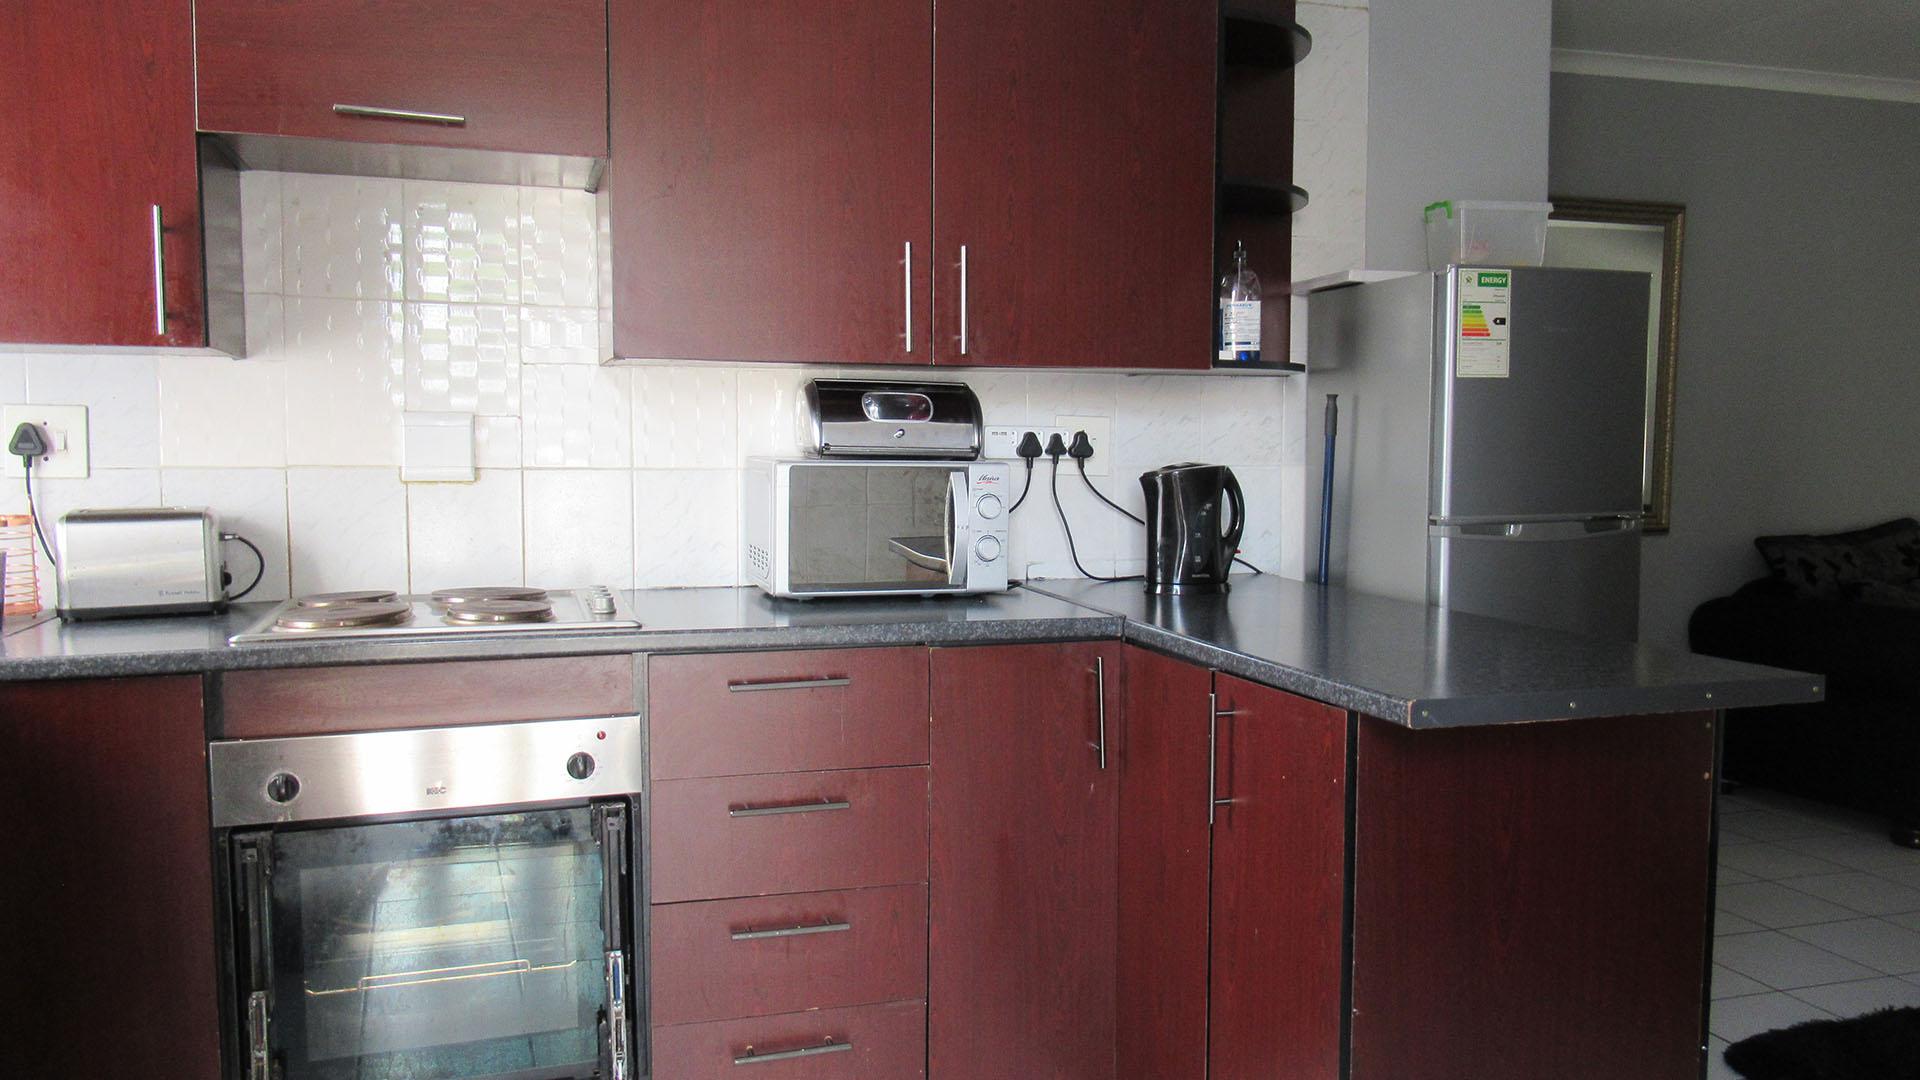 Kitchen - 10 square meters of property in Gleneagles